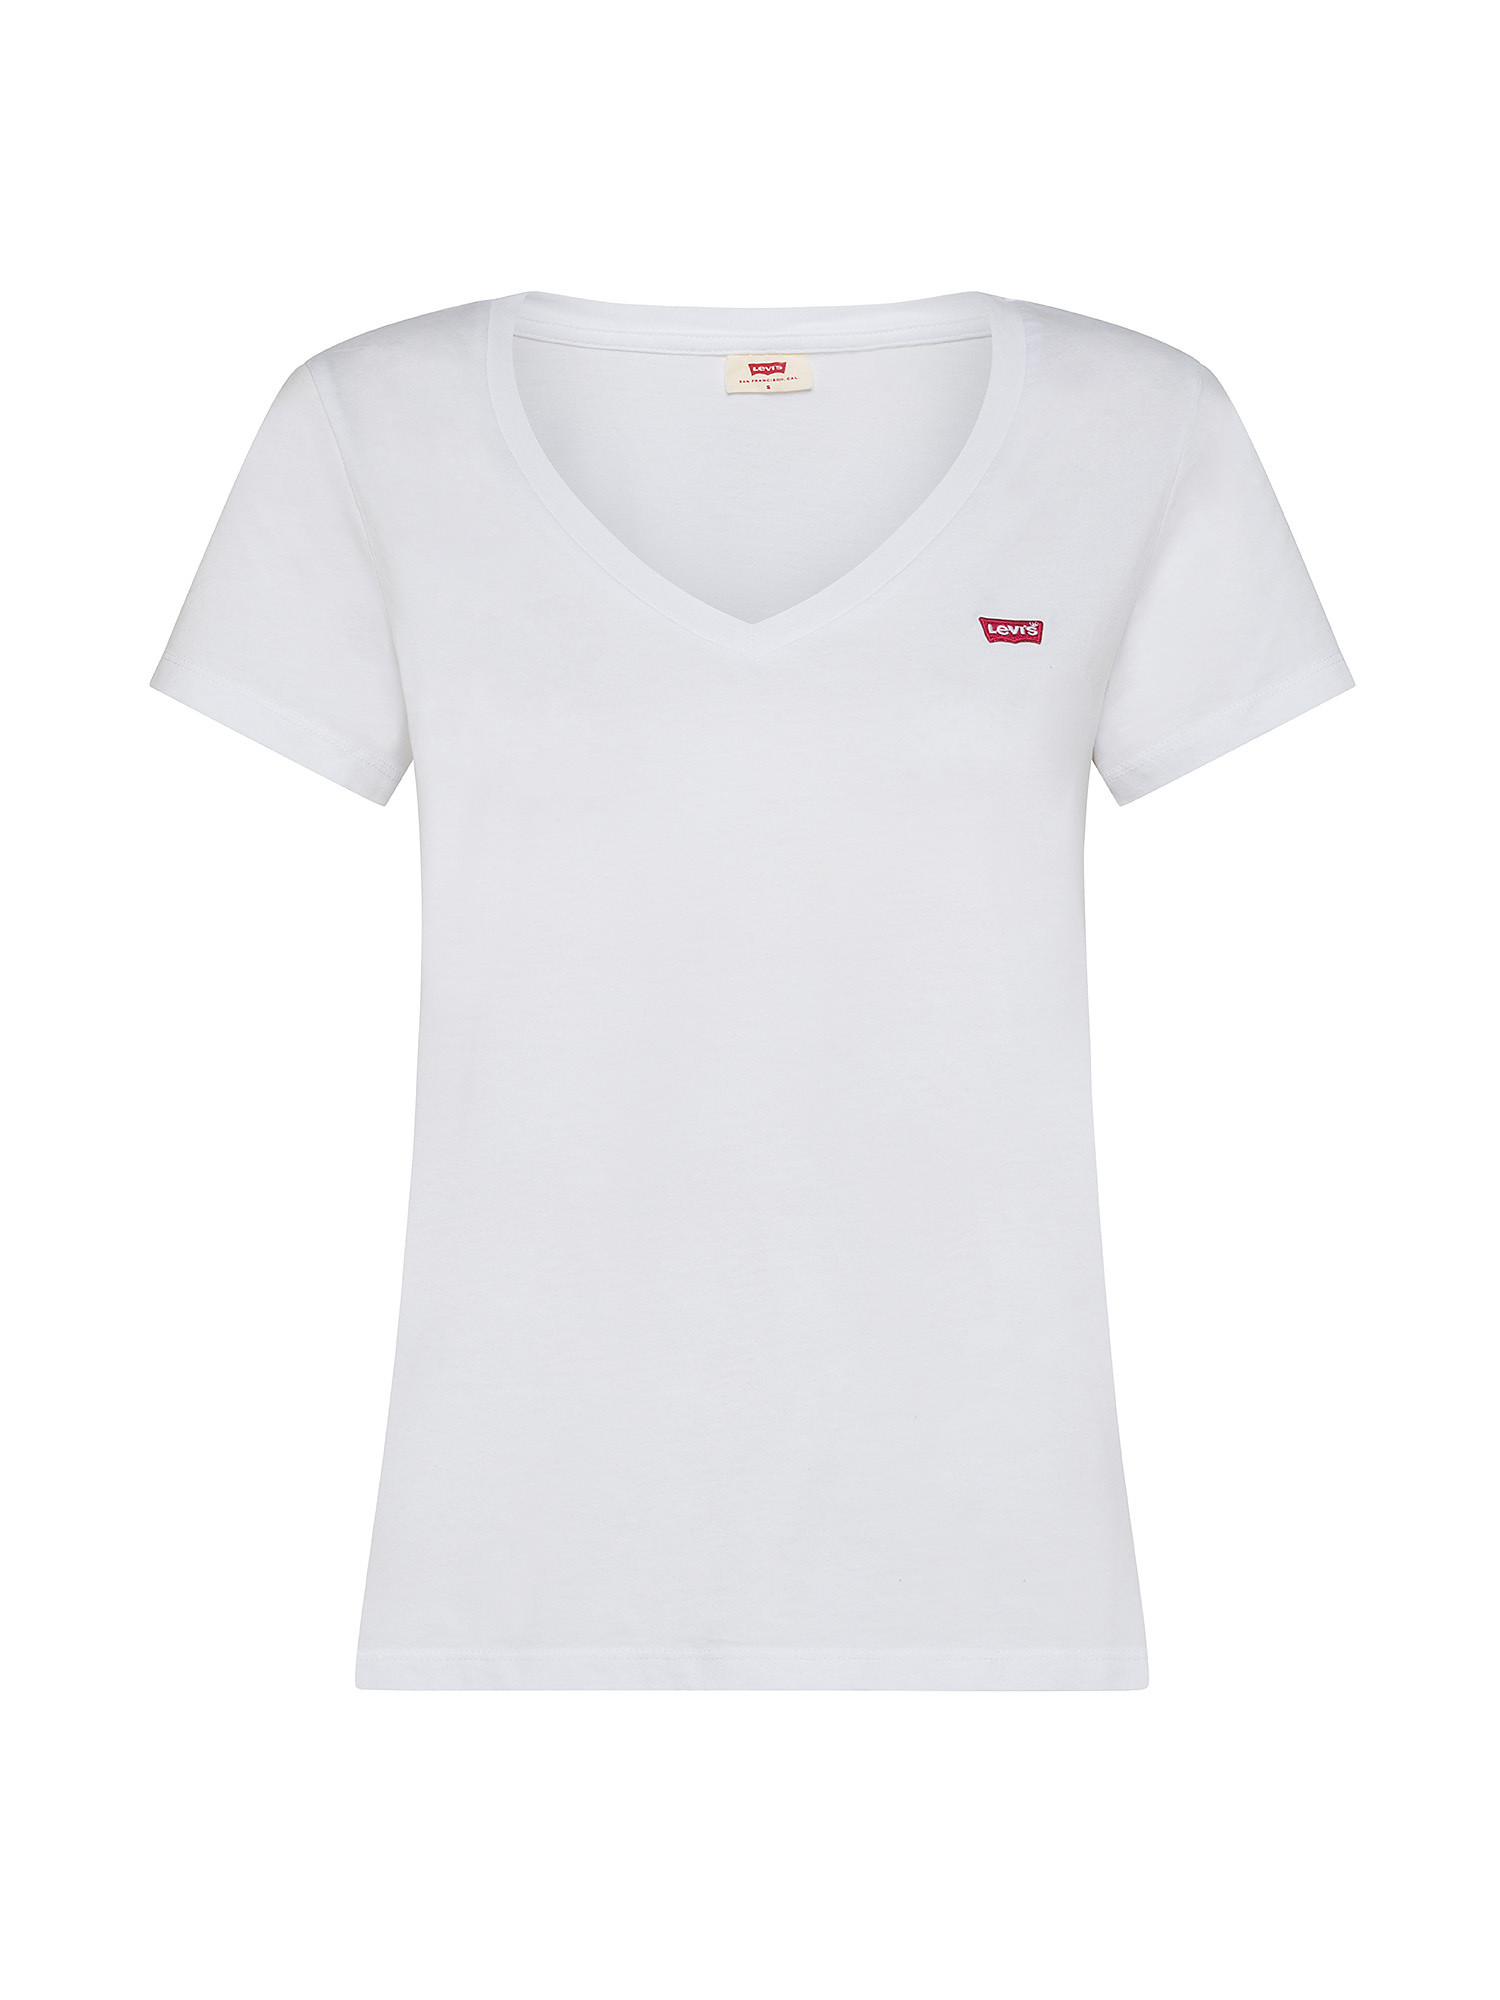 Levi's Logo V-Neck T-Shirt, White, large image number 0